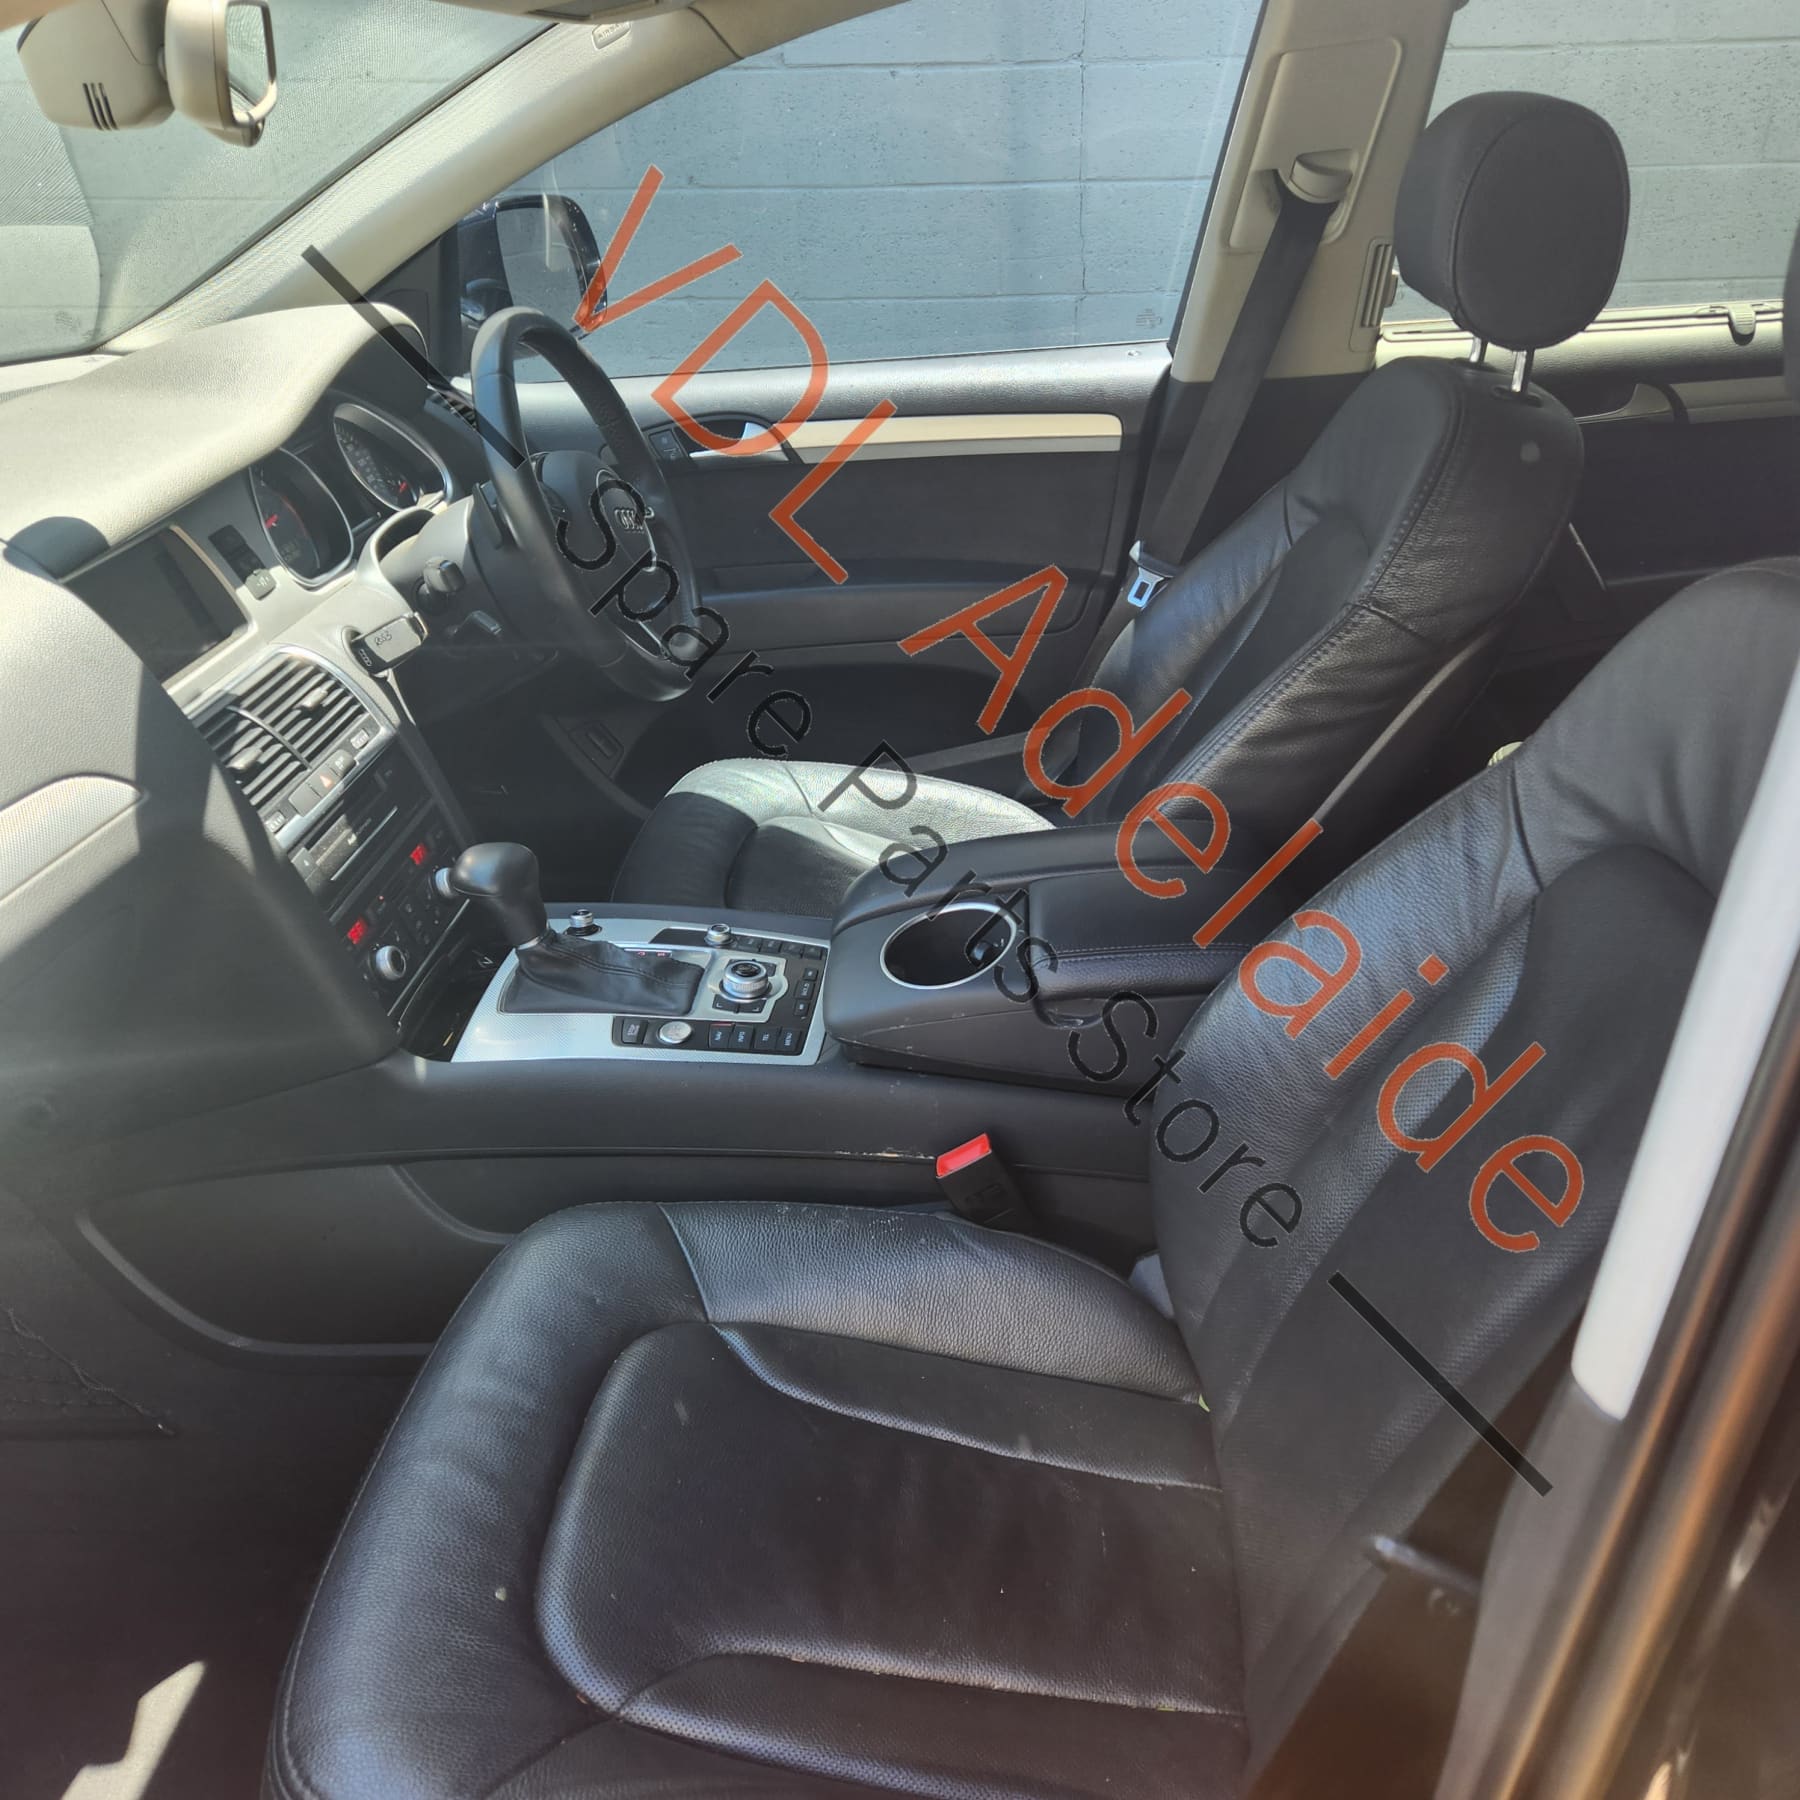 4L0947140 4L0947135G   Audi Q7 Interior Roof Dome Light Switch Panel with Sunglasses Holder 4L0947140 4L0947135G